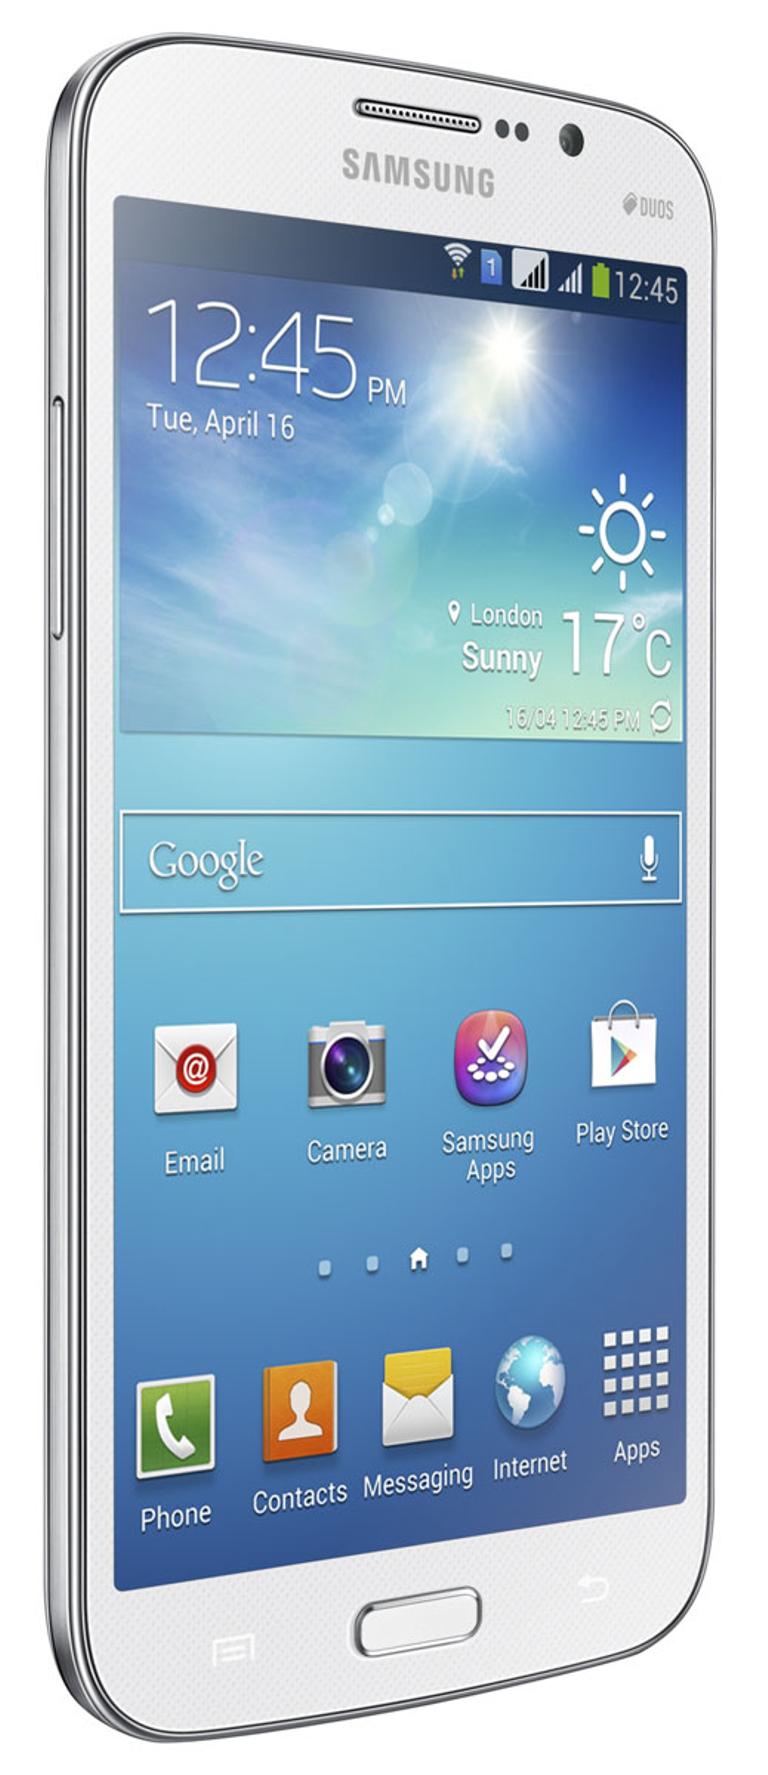 Samsung Galaxy Mega 5.8 blanco vista lateral